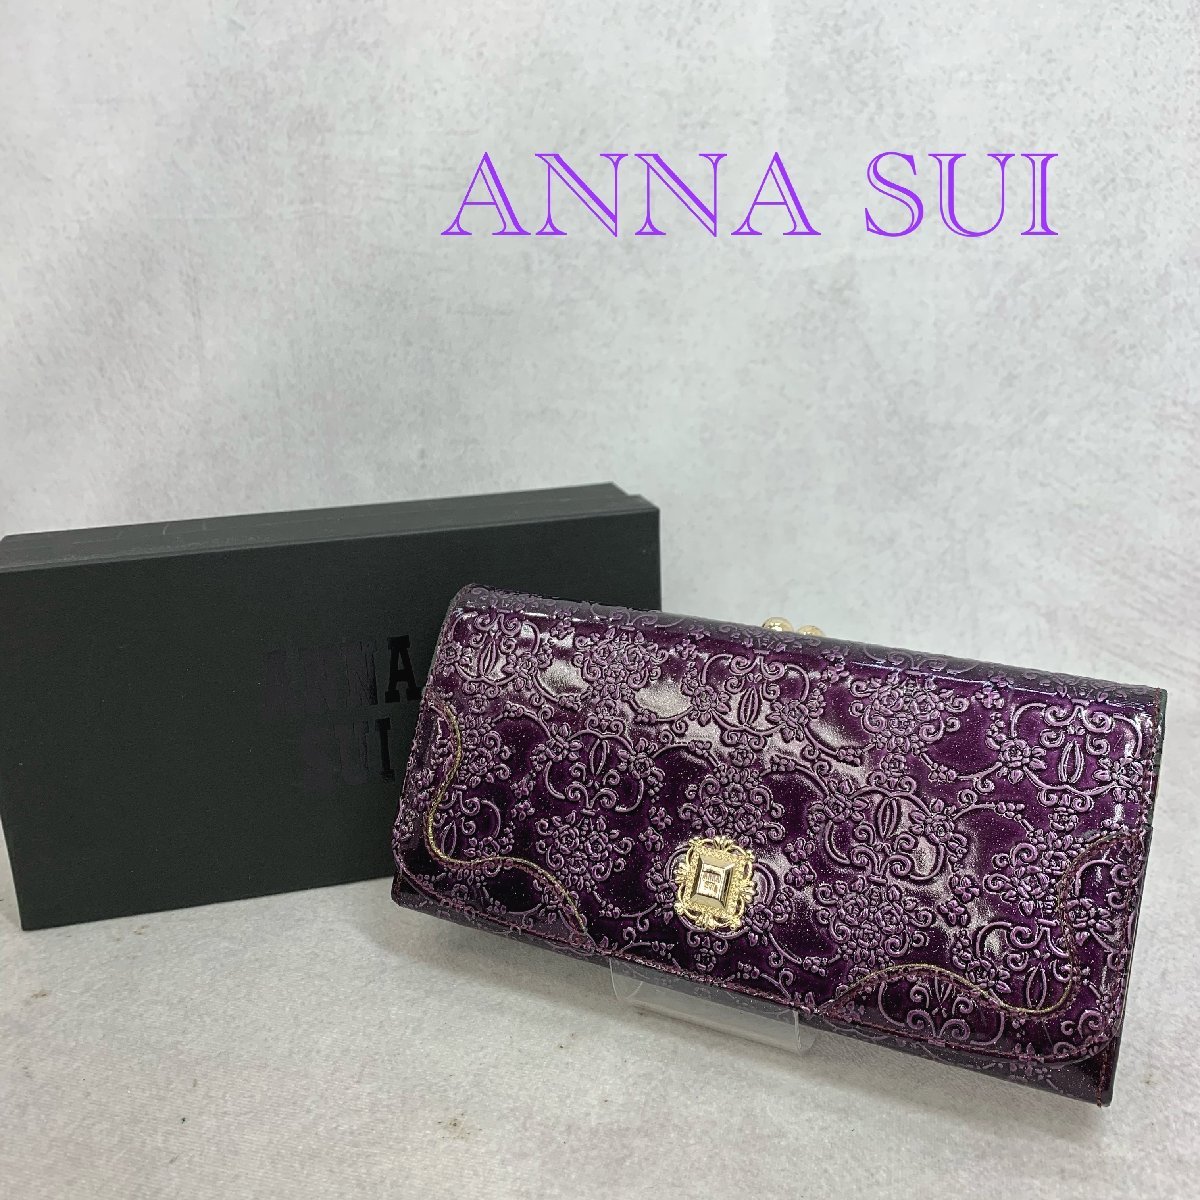 ANNA SUI Anna Sui Roo mi- clasp flap long wallet 310491-96 cow leather leather enamel purple Damas Crows bulrush . purse lady's bag 